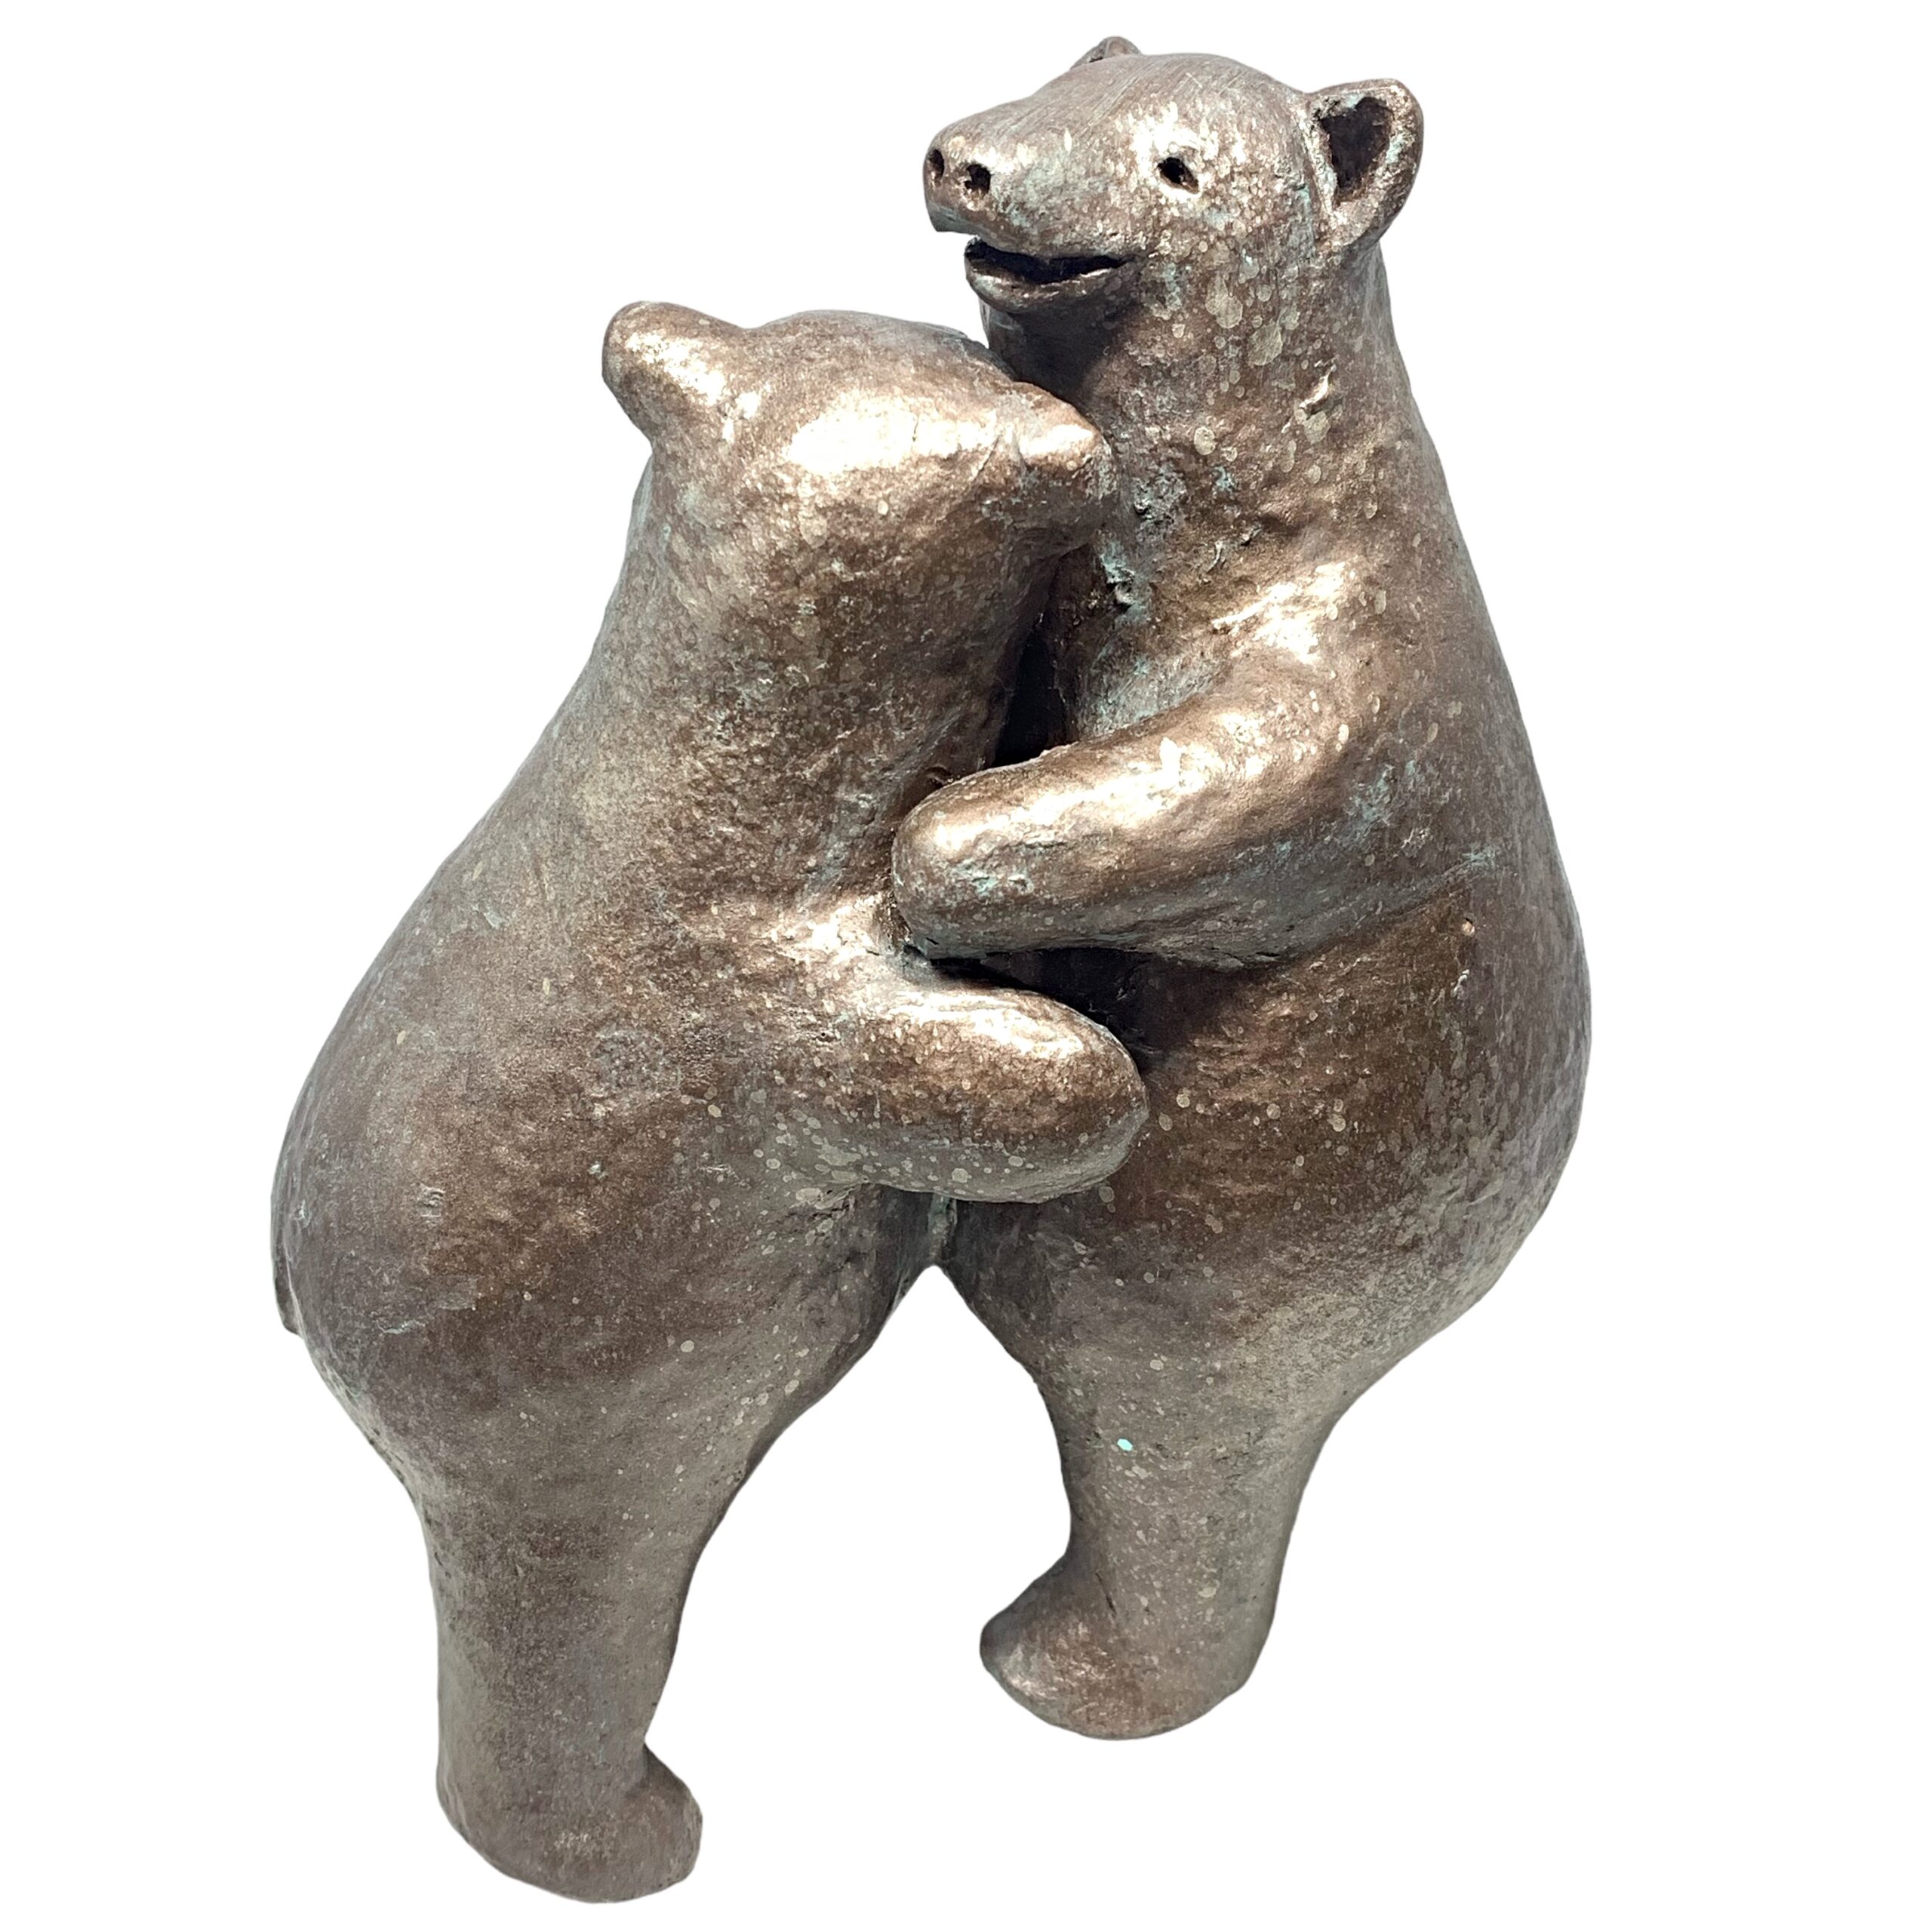 Group Hug, cute hugging mixed media bear sculptures by Karin Taylor at Effusion Art Gallery in Invermere, BC.